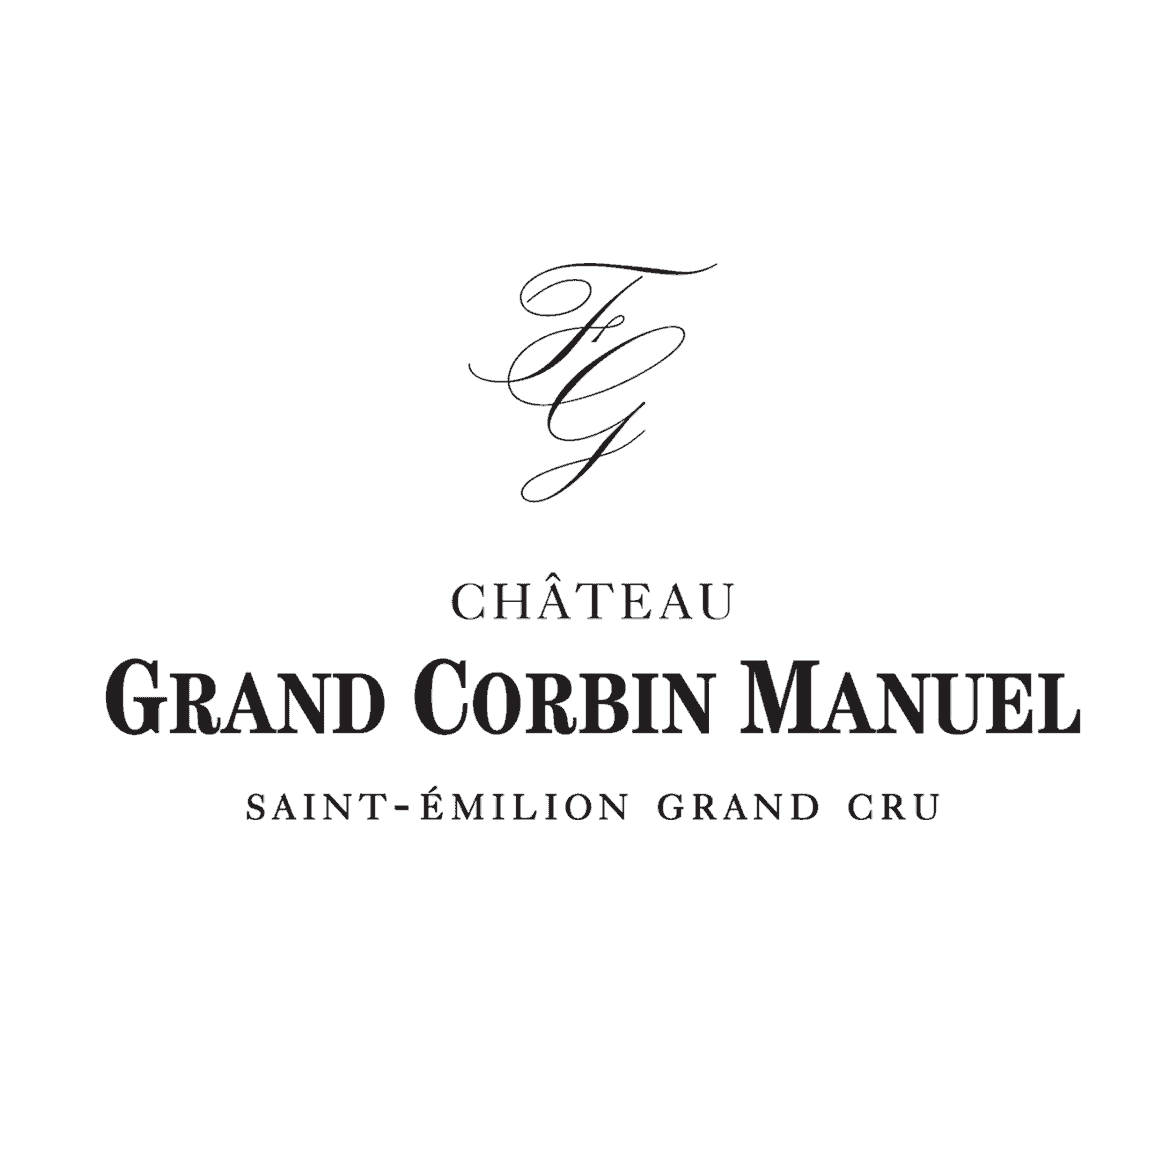 Château GRAND CORBIN MANUEL - Nicolas Husson Conseils